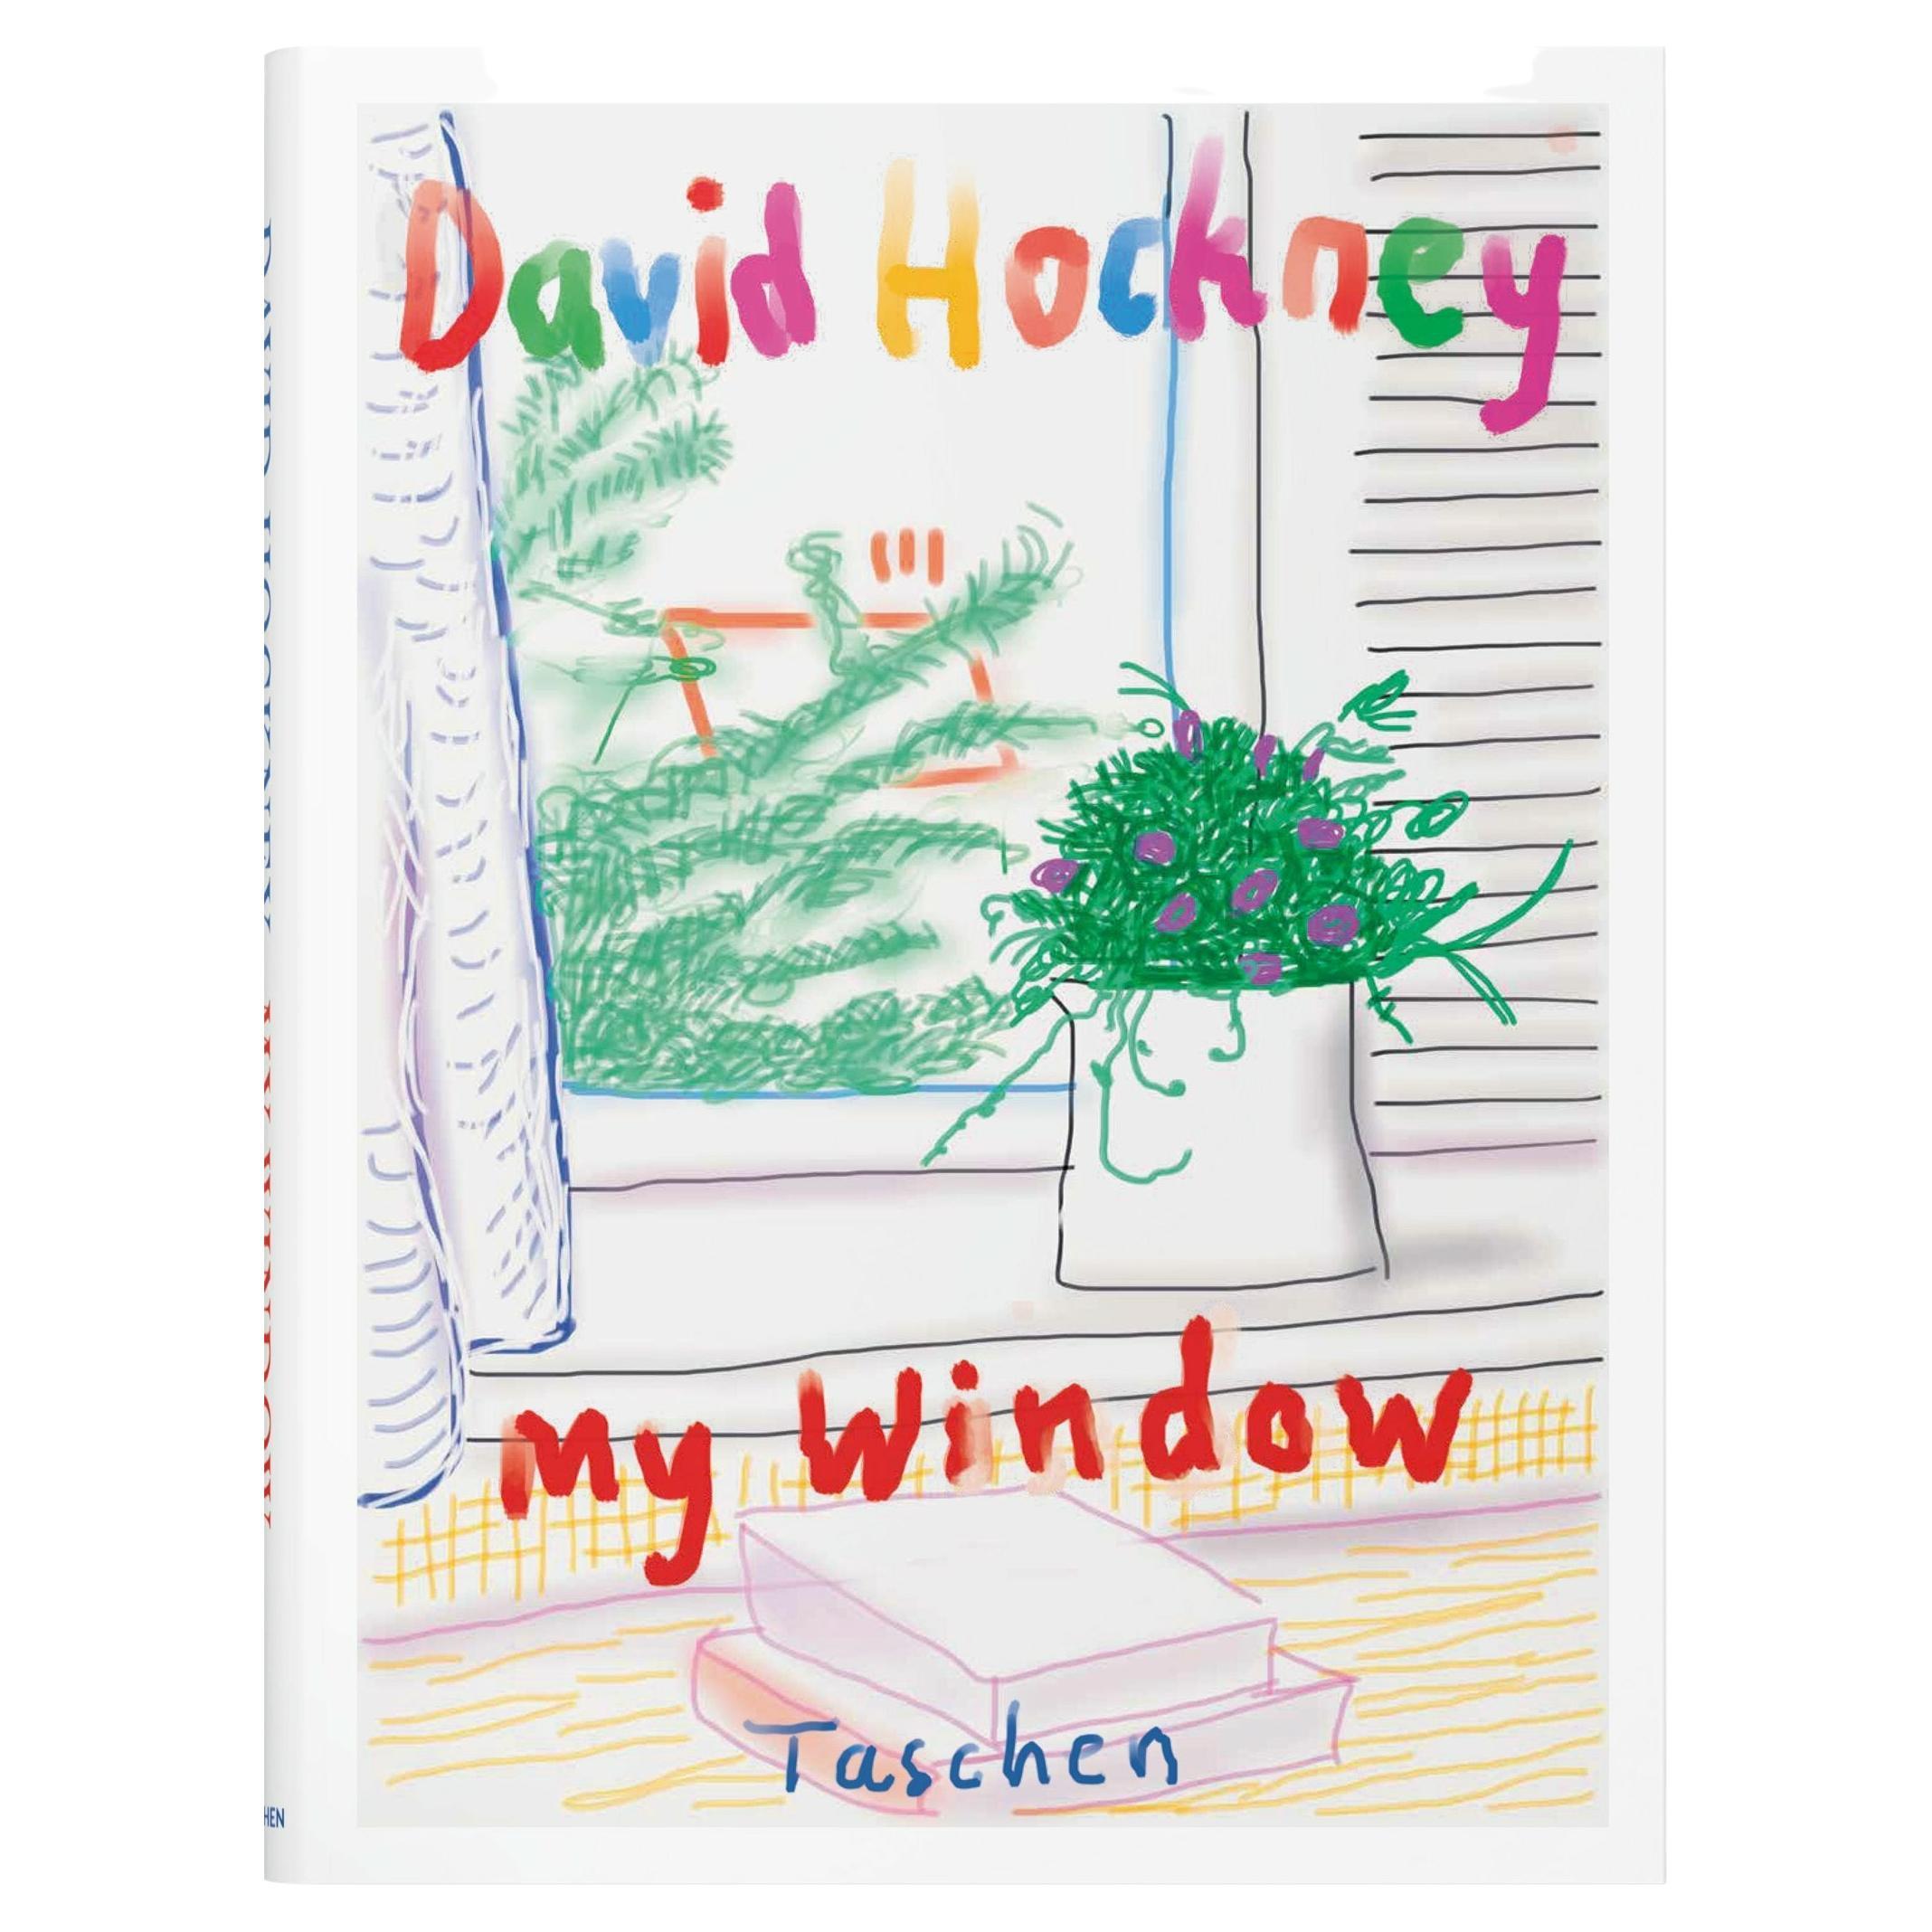 David Hockney, le livre d'artiste de The Window en vente